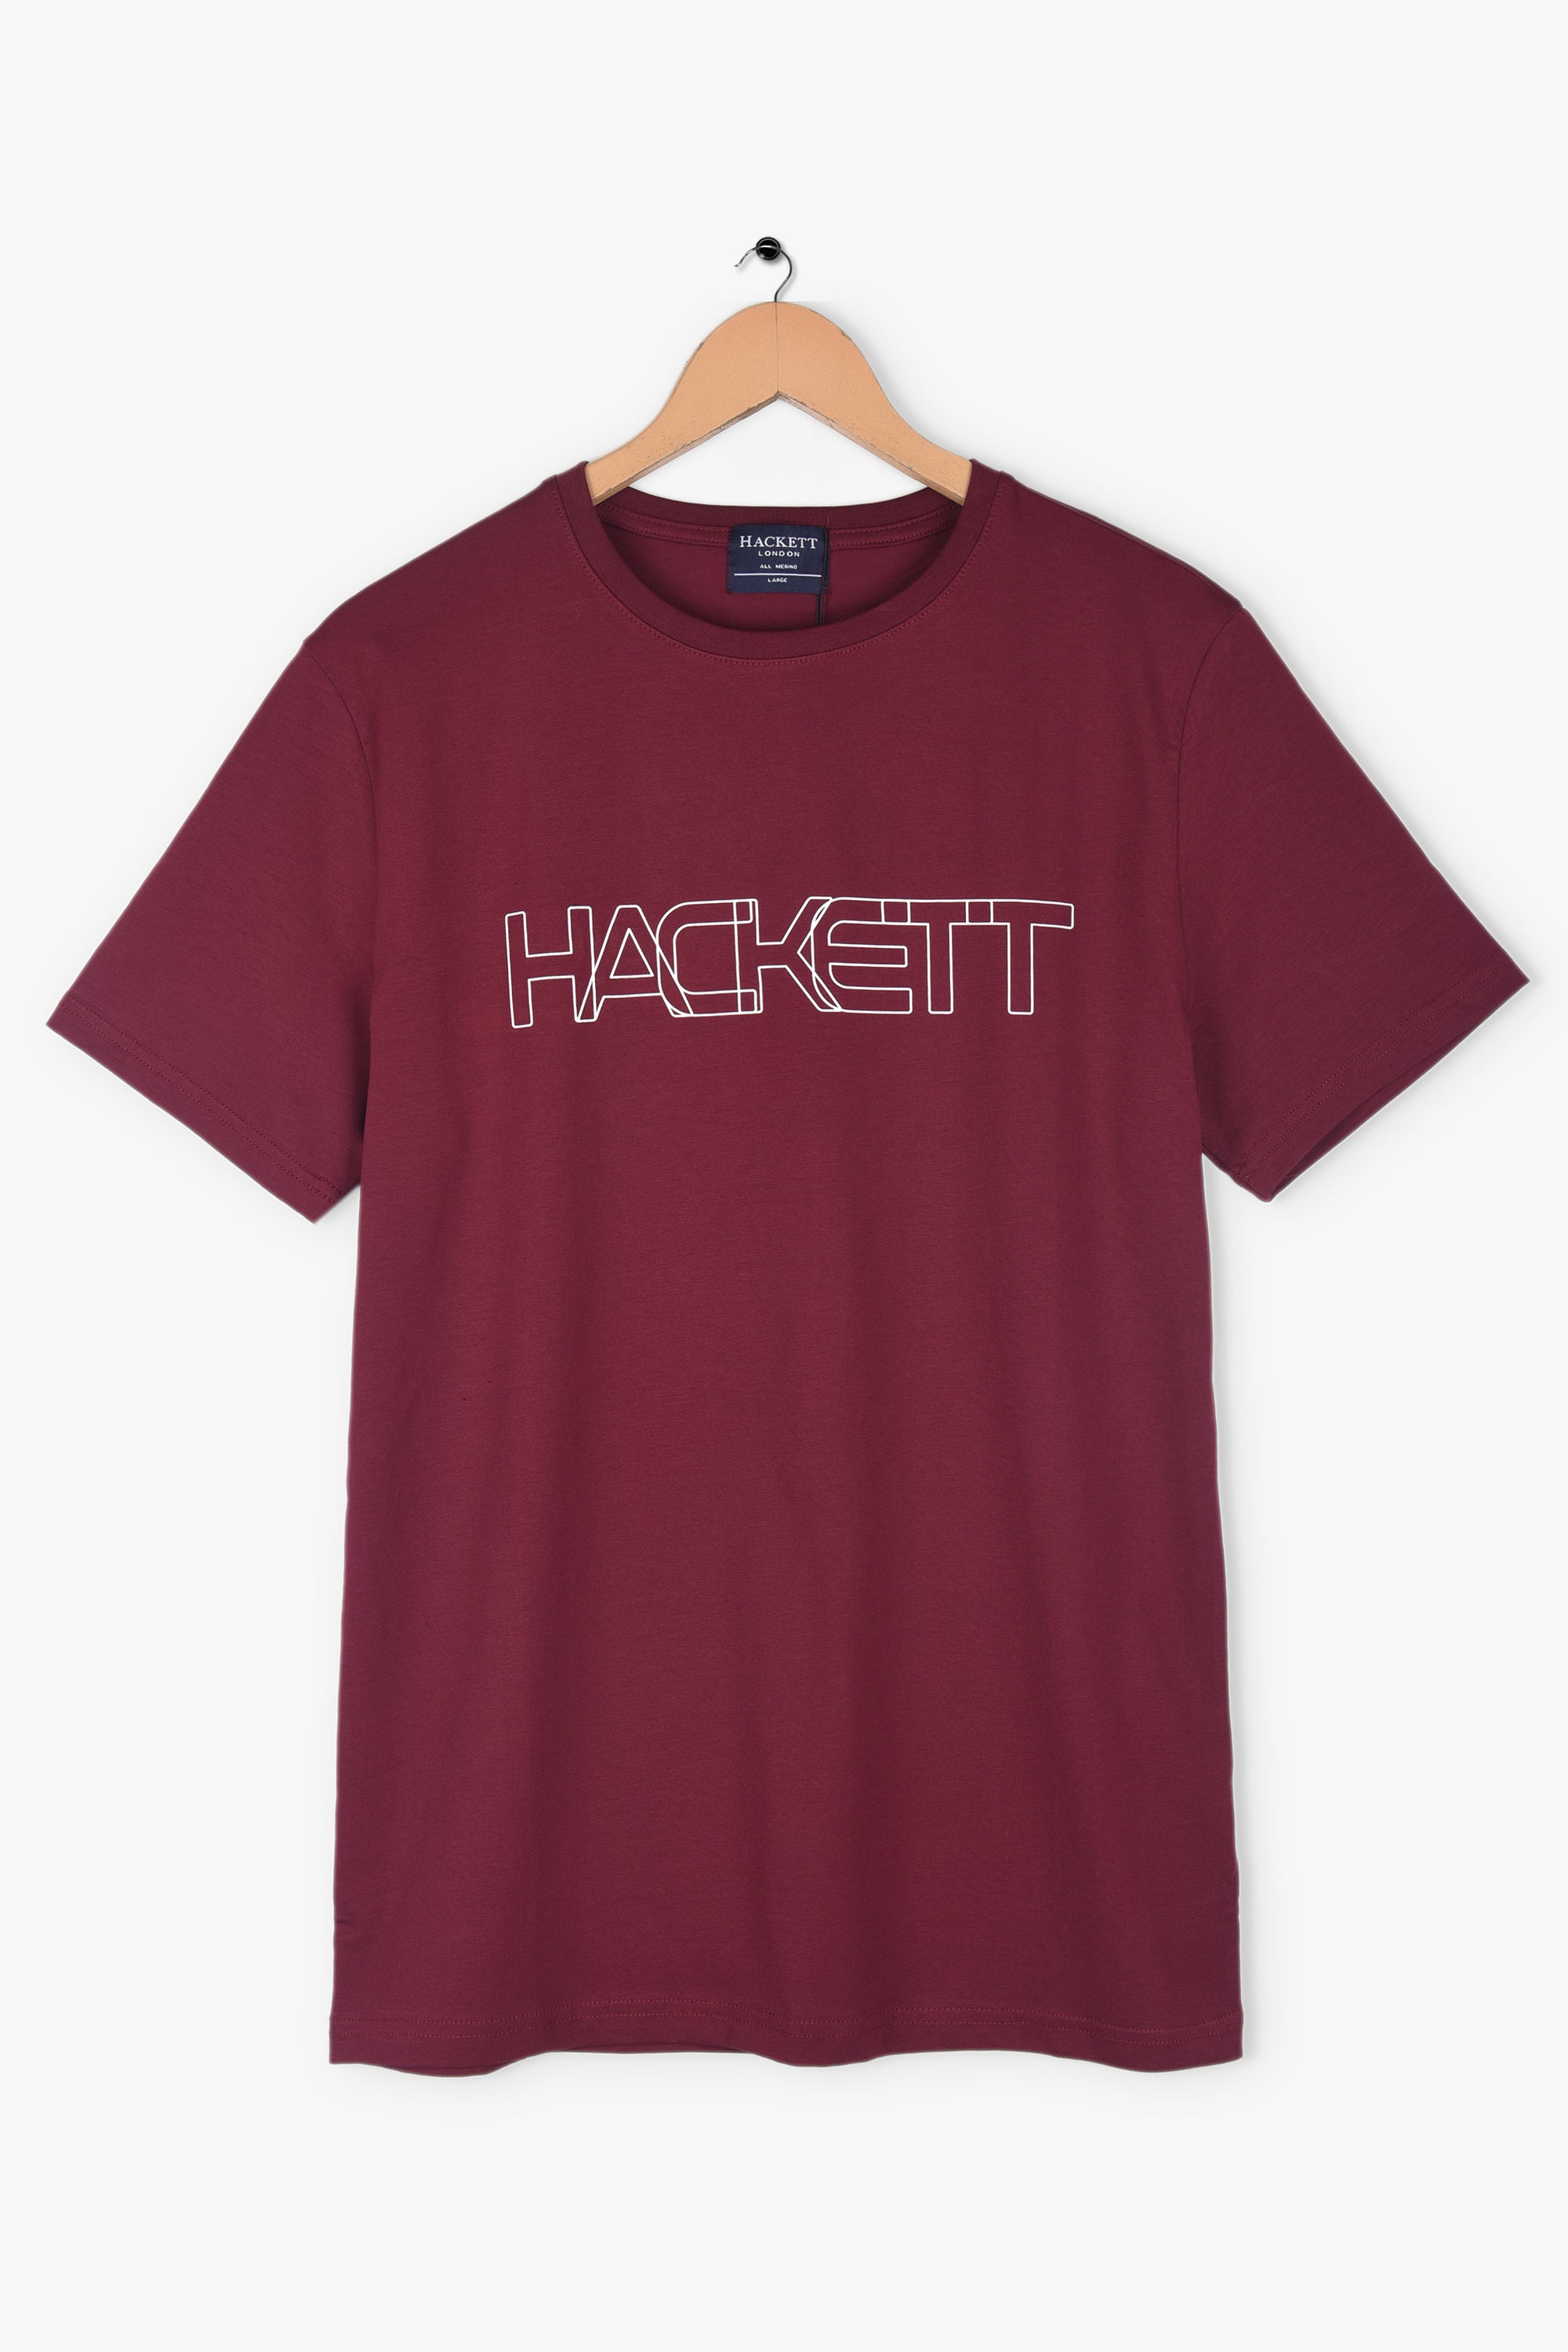 HACKET PRINTED LOGO T-shirt